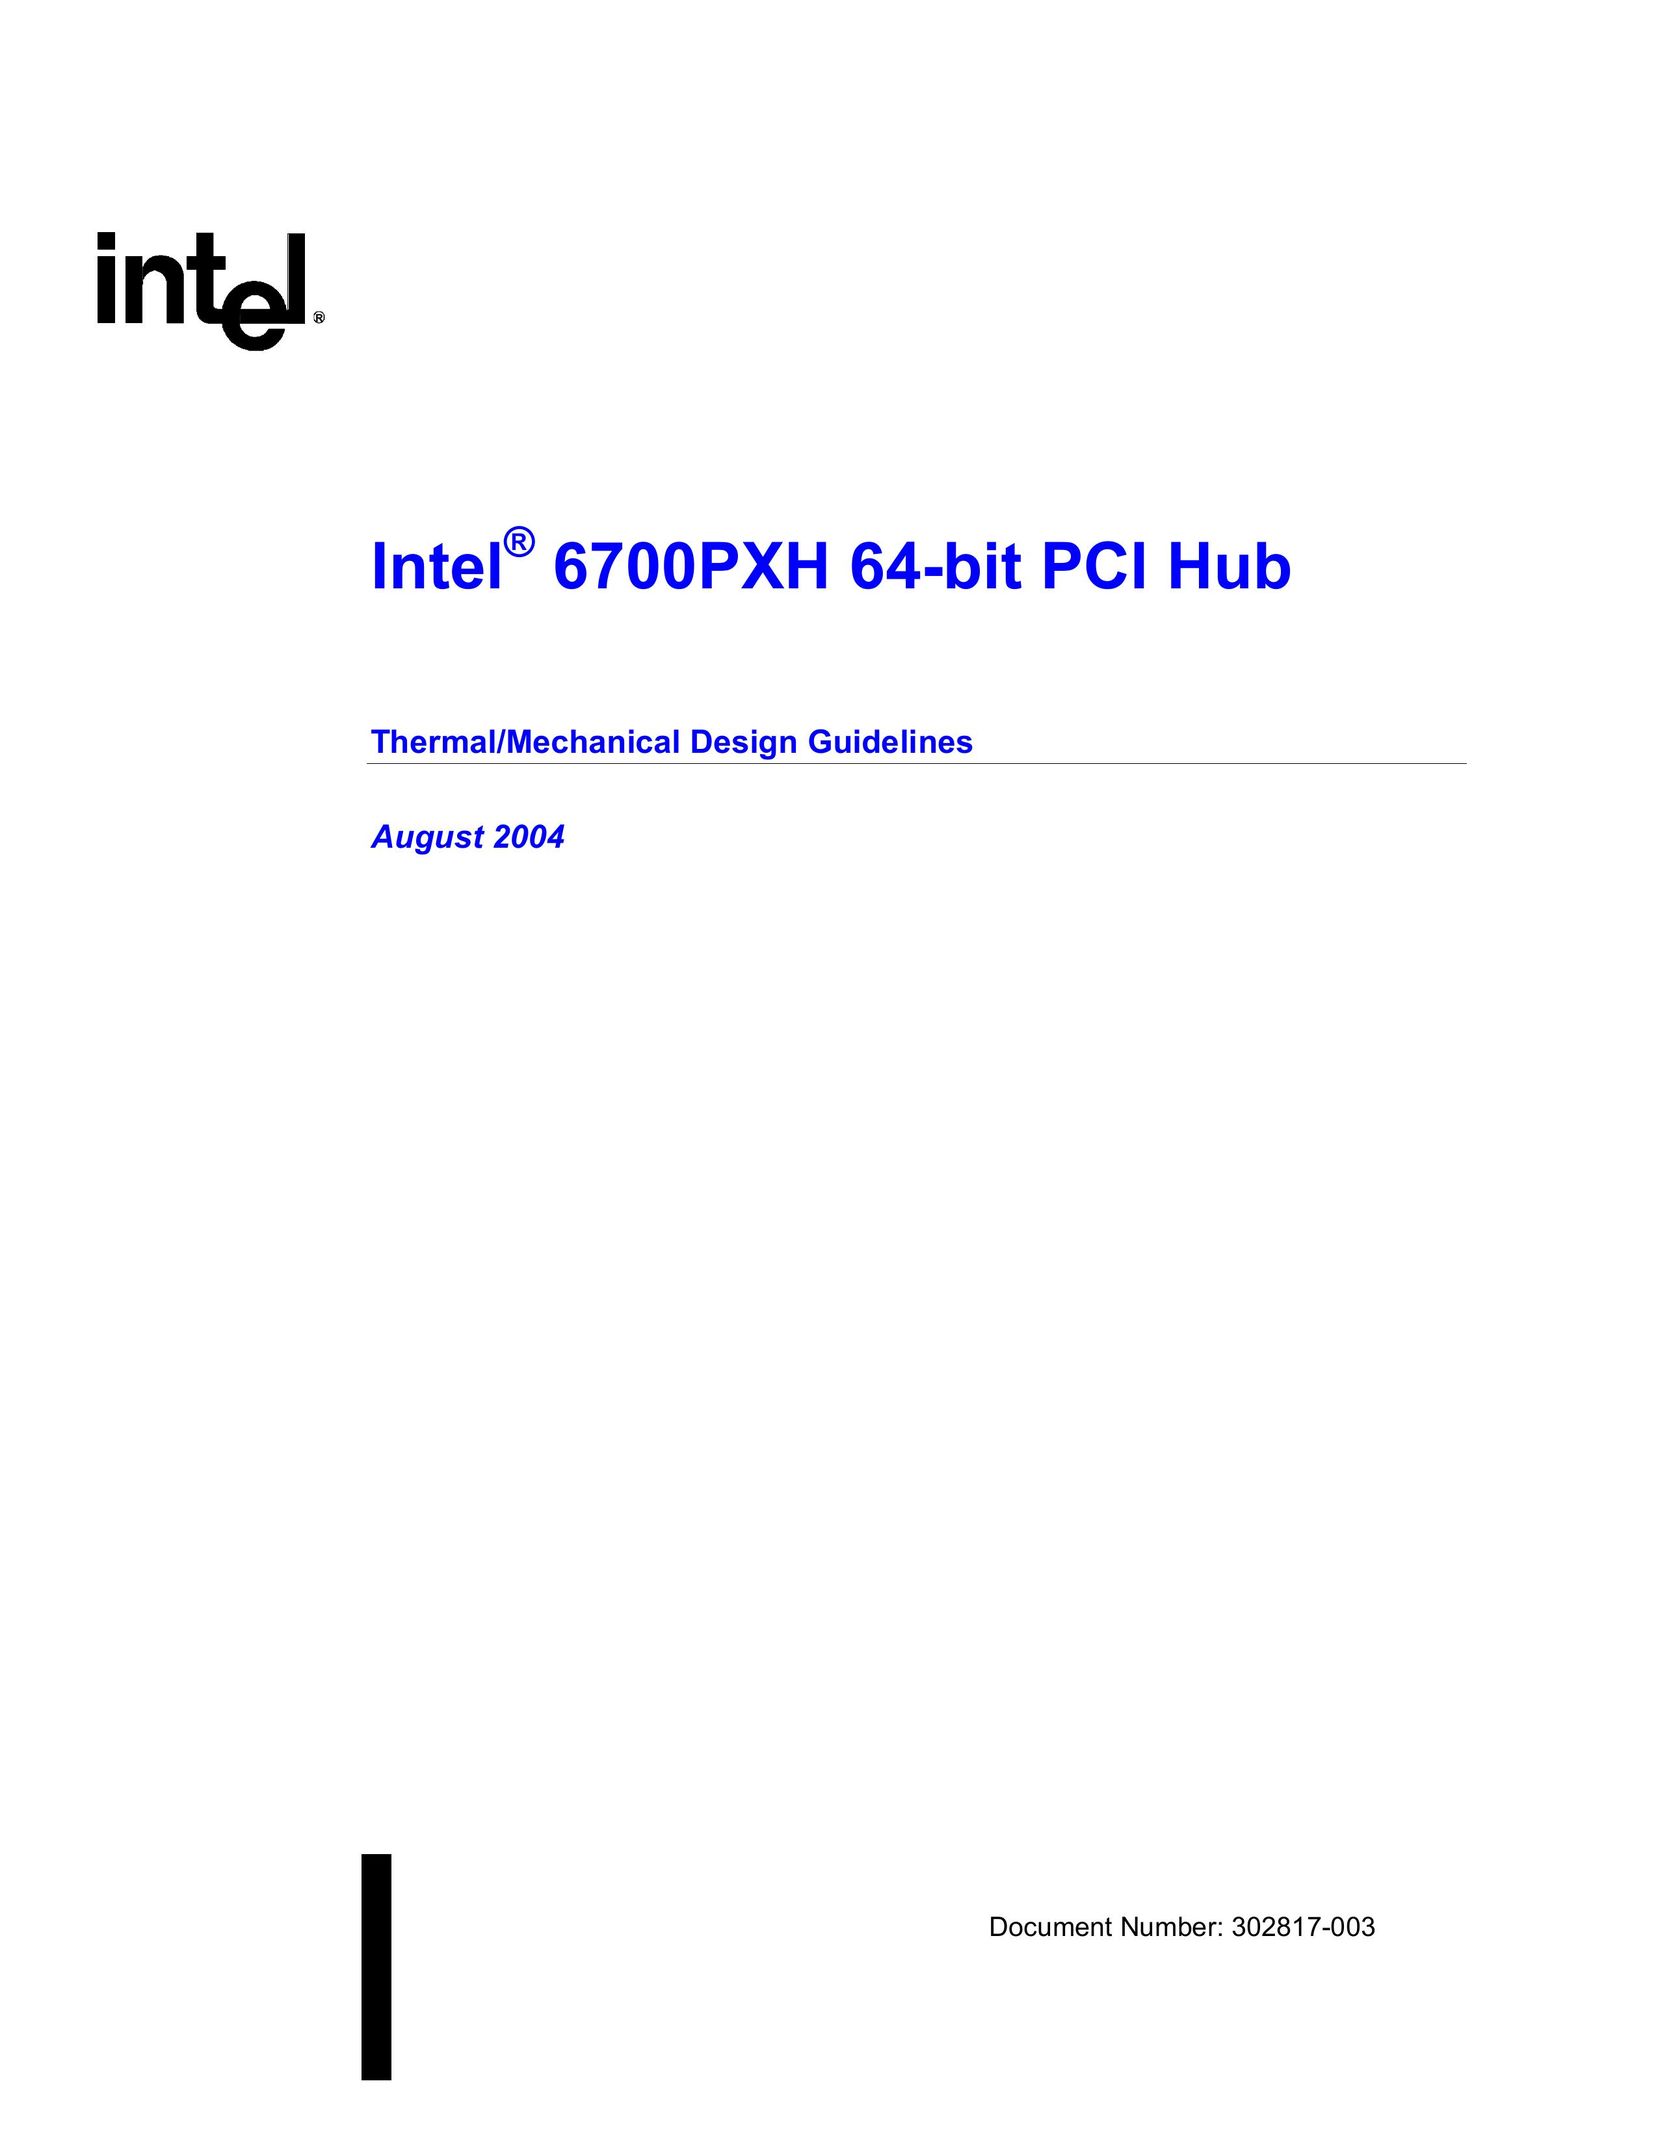 Intel 6700PXH Computer Hardware User Manual